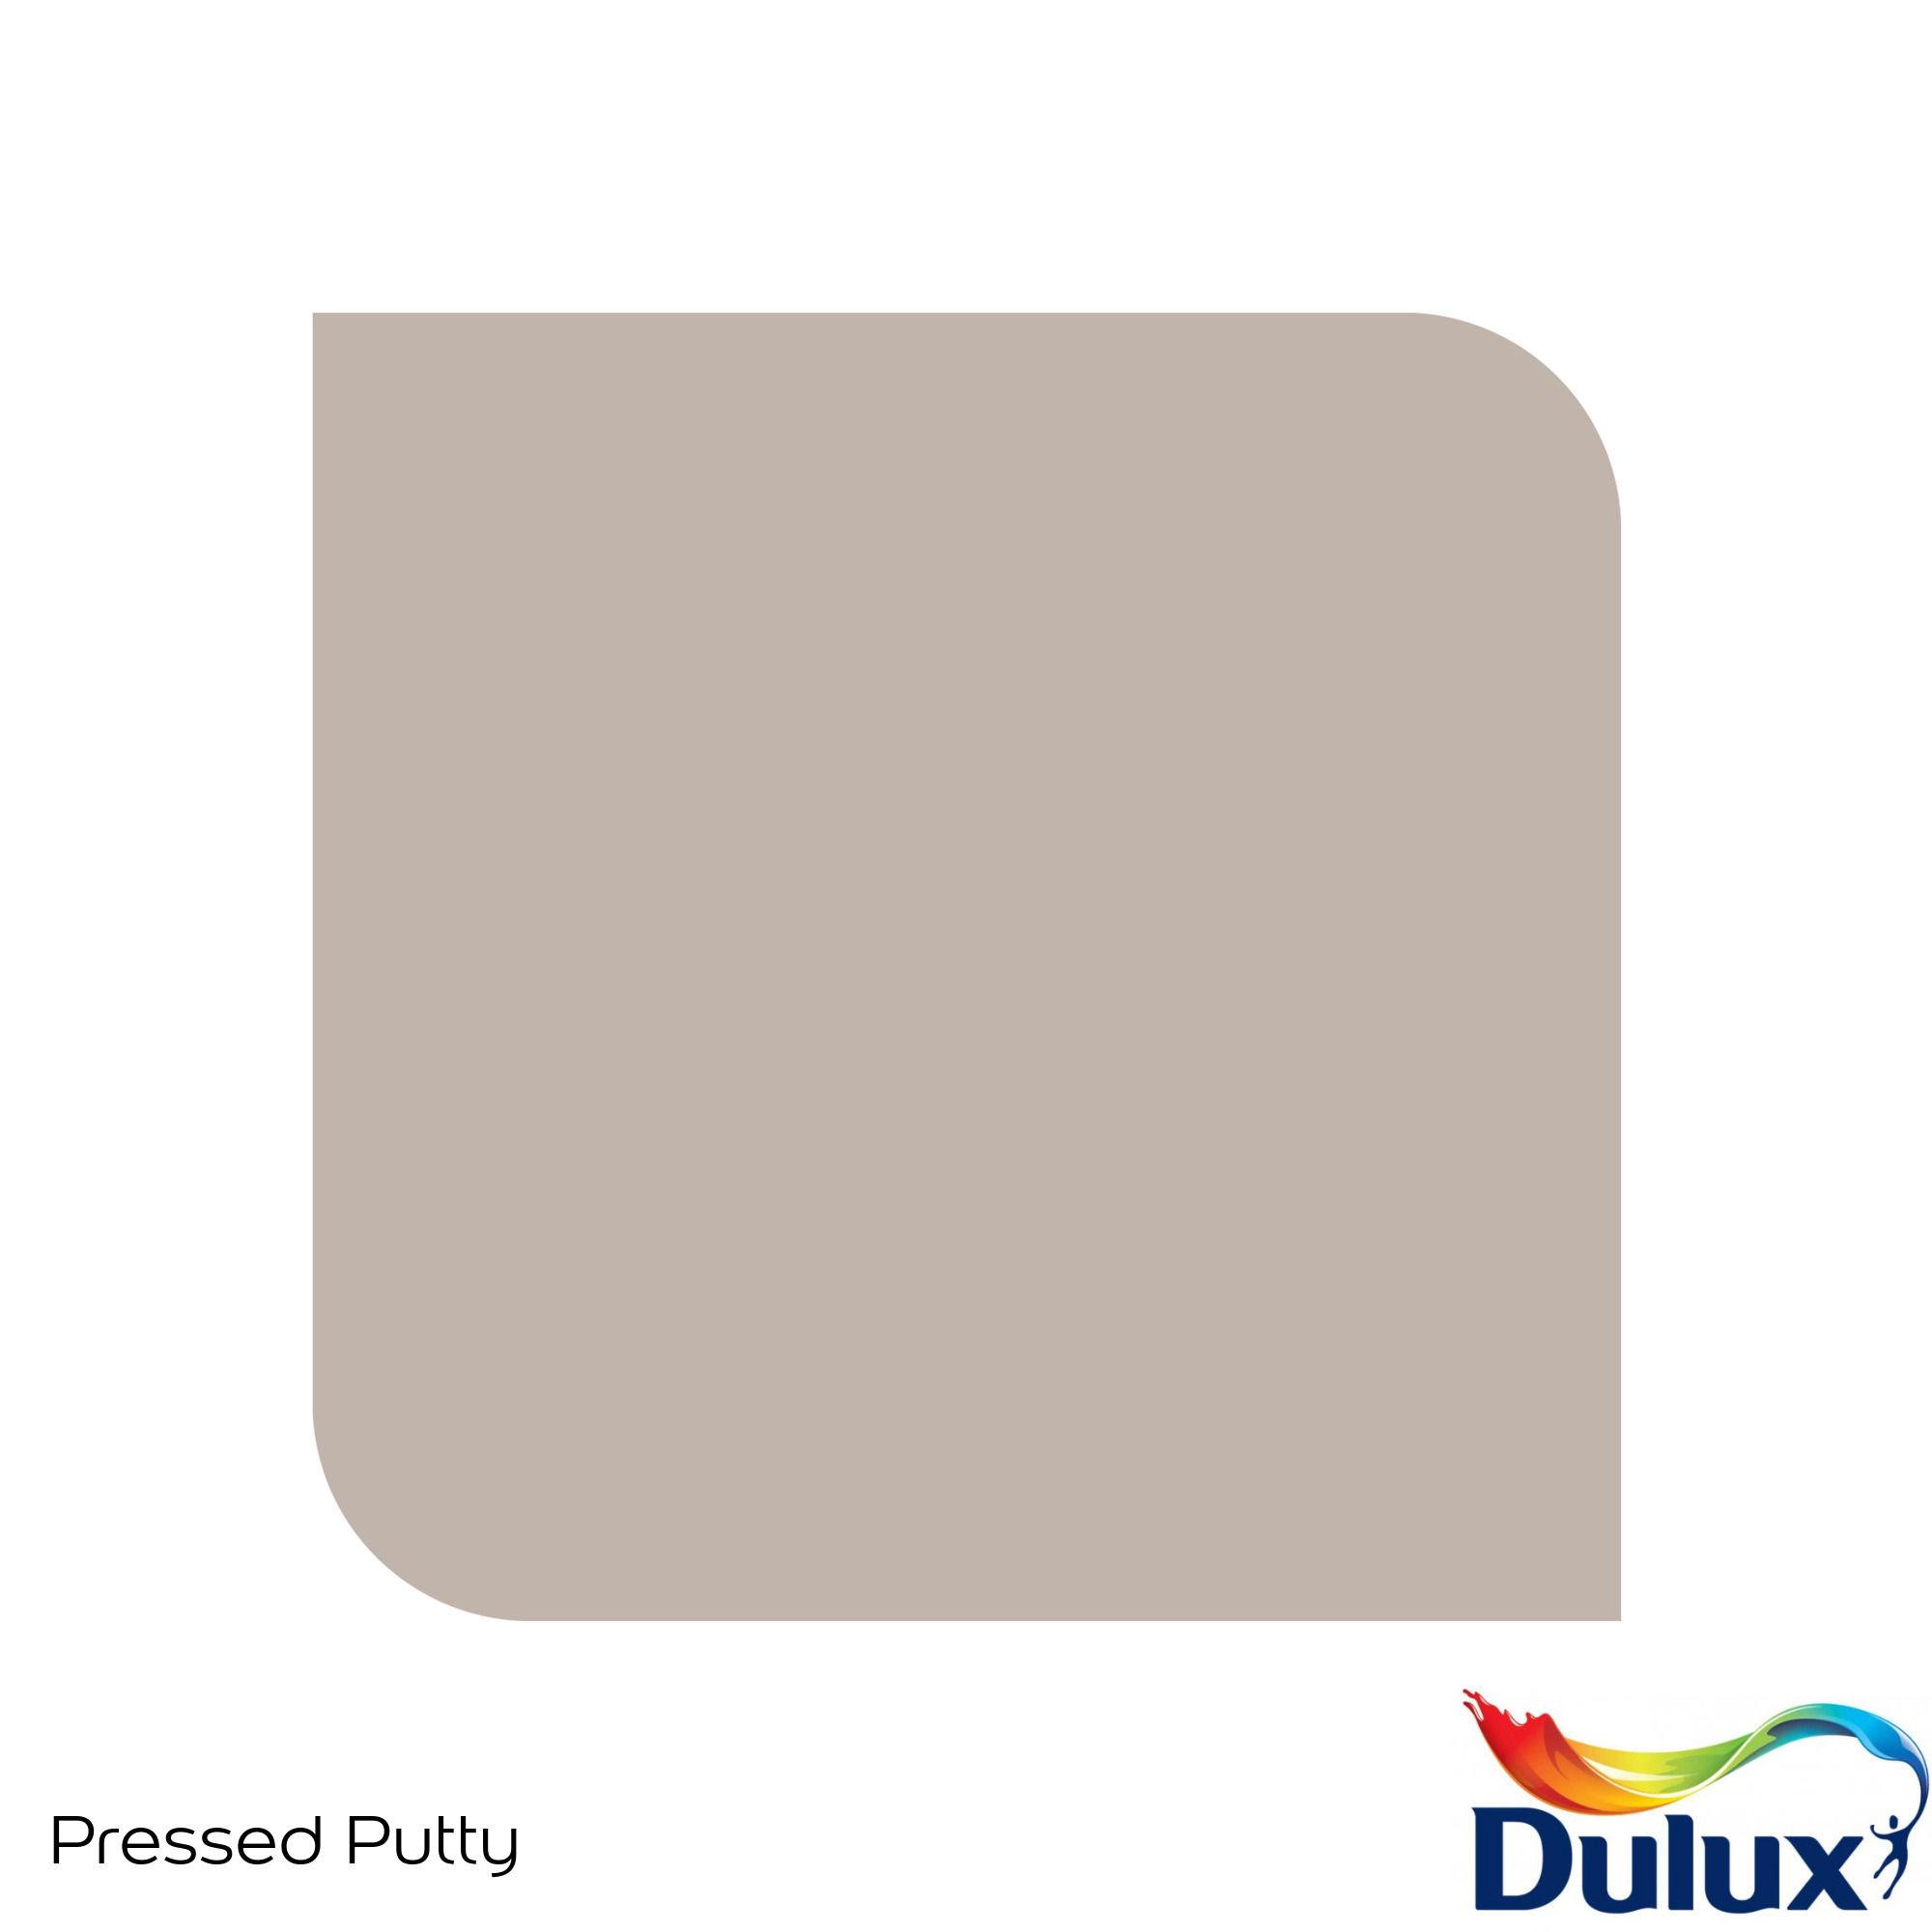 Dulux Easycare Kitchen Pressed Putty Matt Wall paint, 30ml